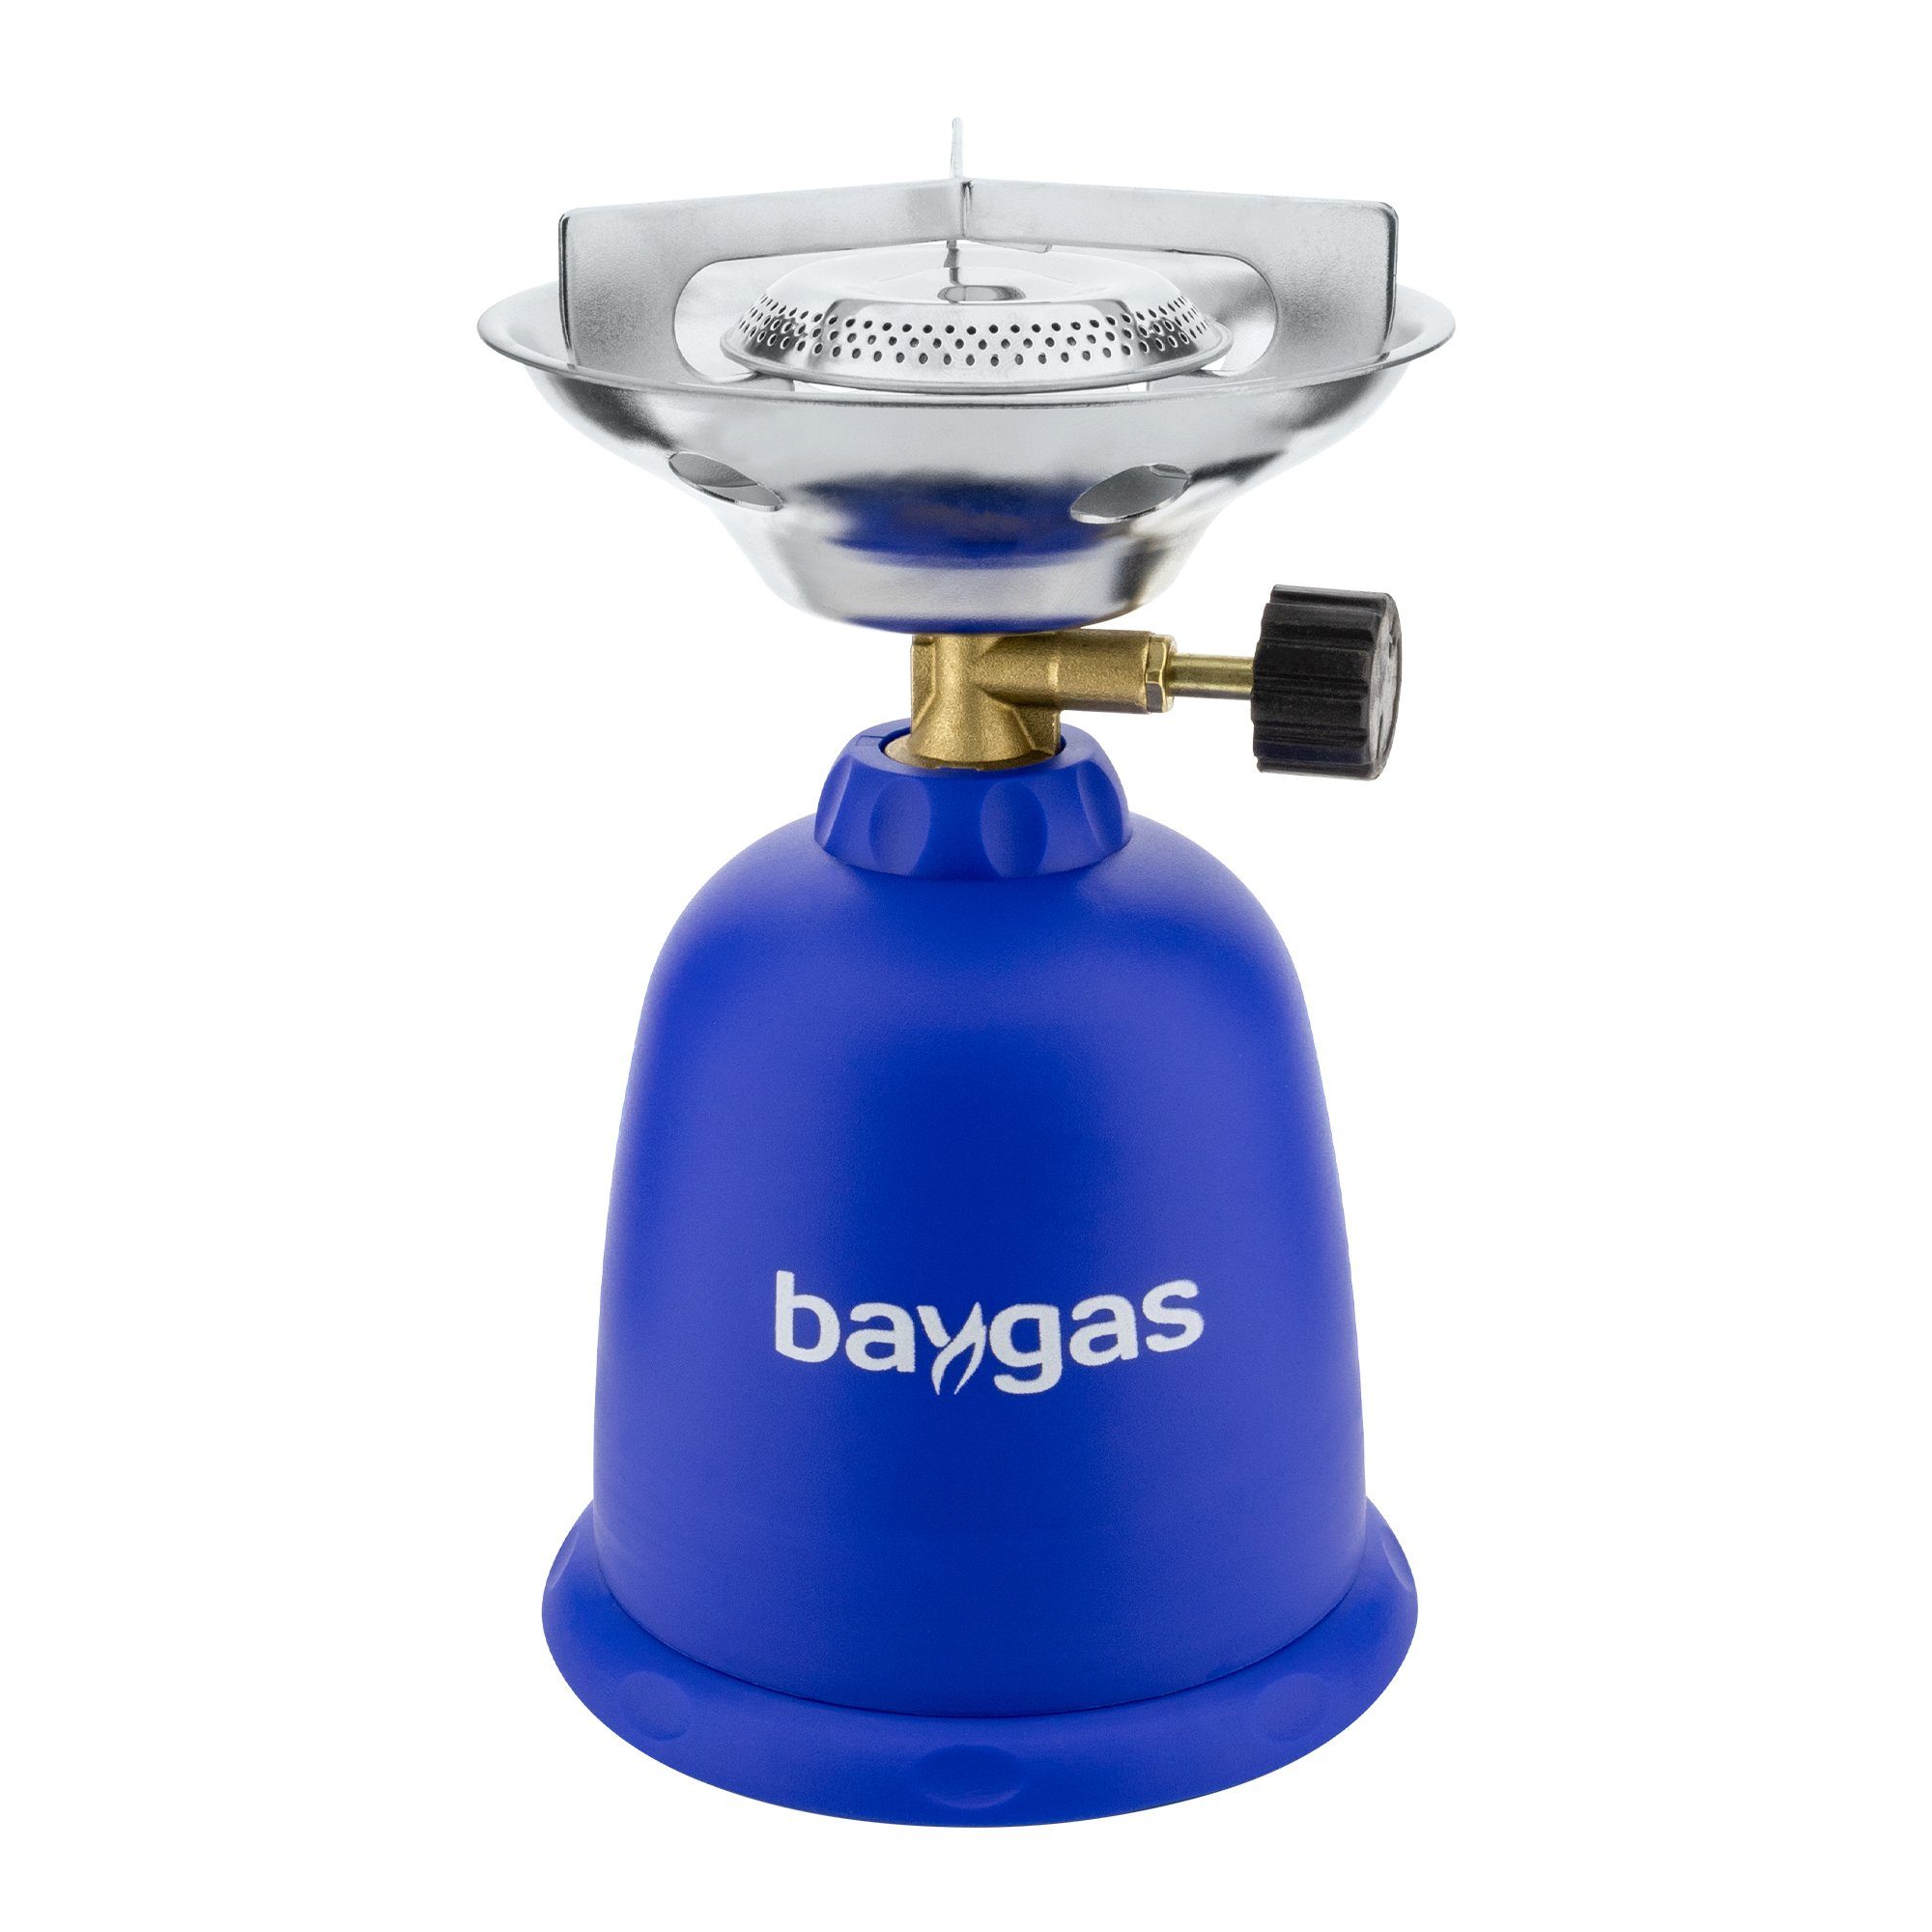 baygas Gaskocher Baygas Campingkocher Kunststoffkörper Blau 1- Flammig für Outdoor